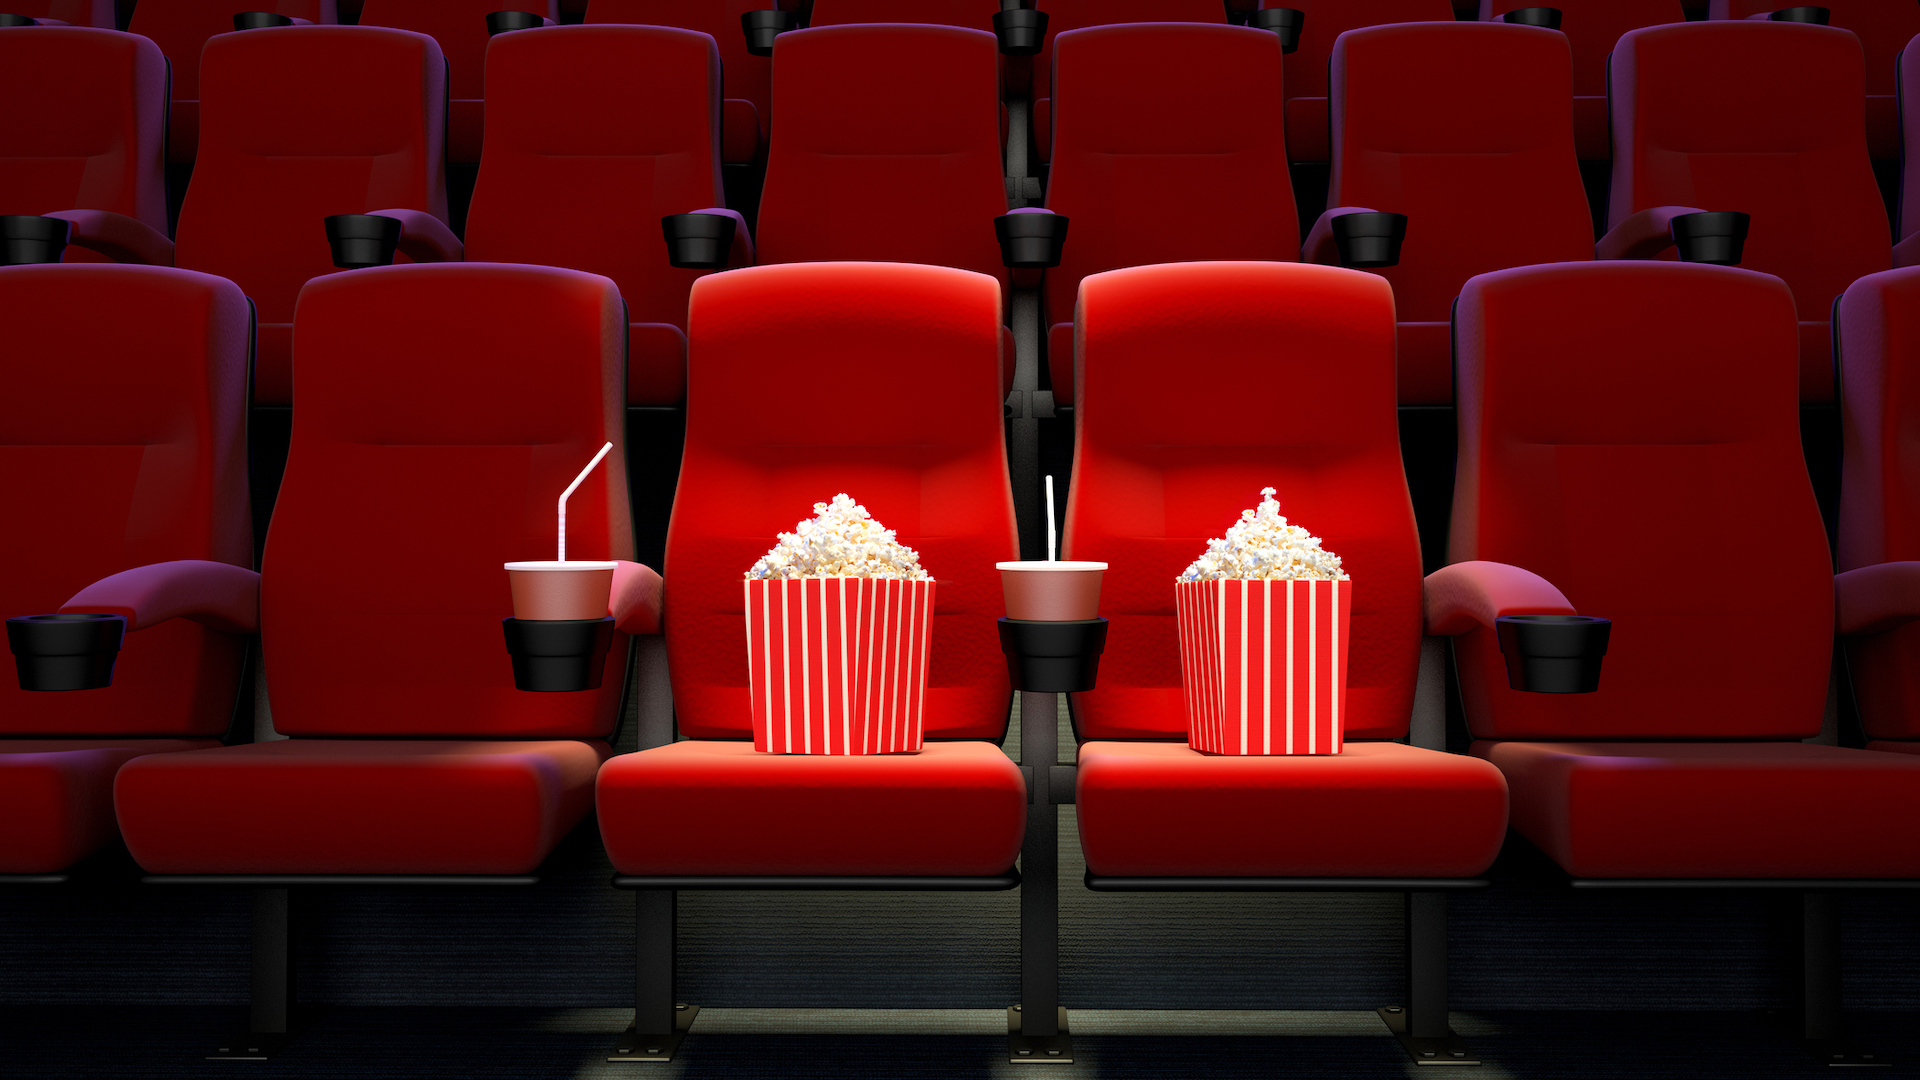 Popcorn, drinks and cinema seats